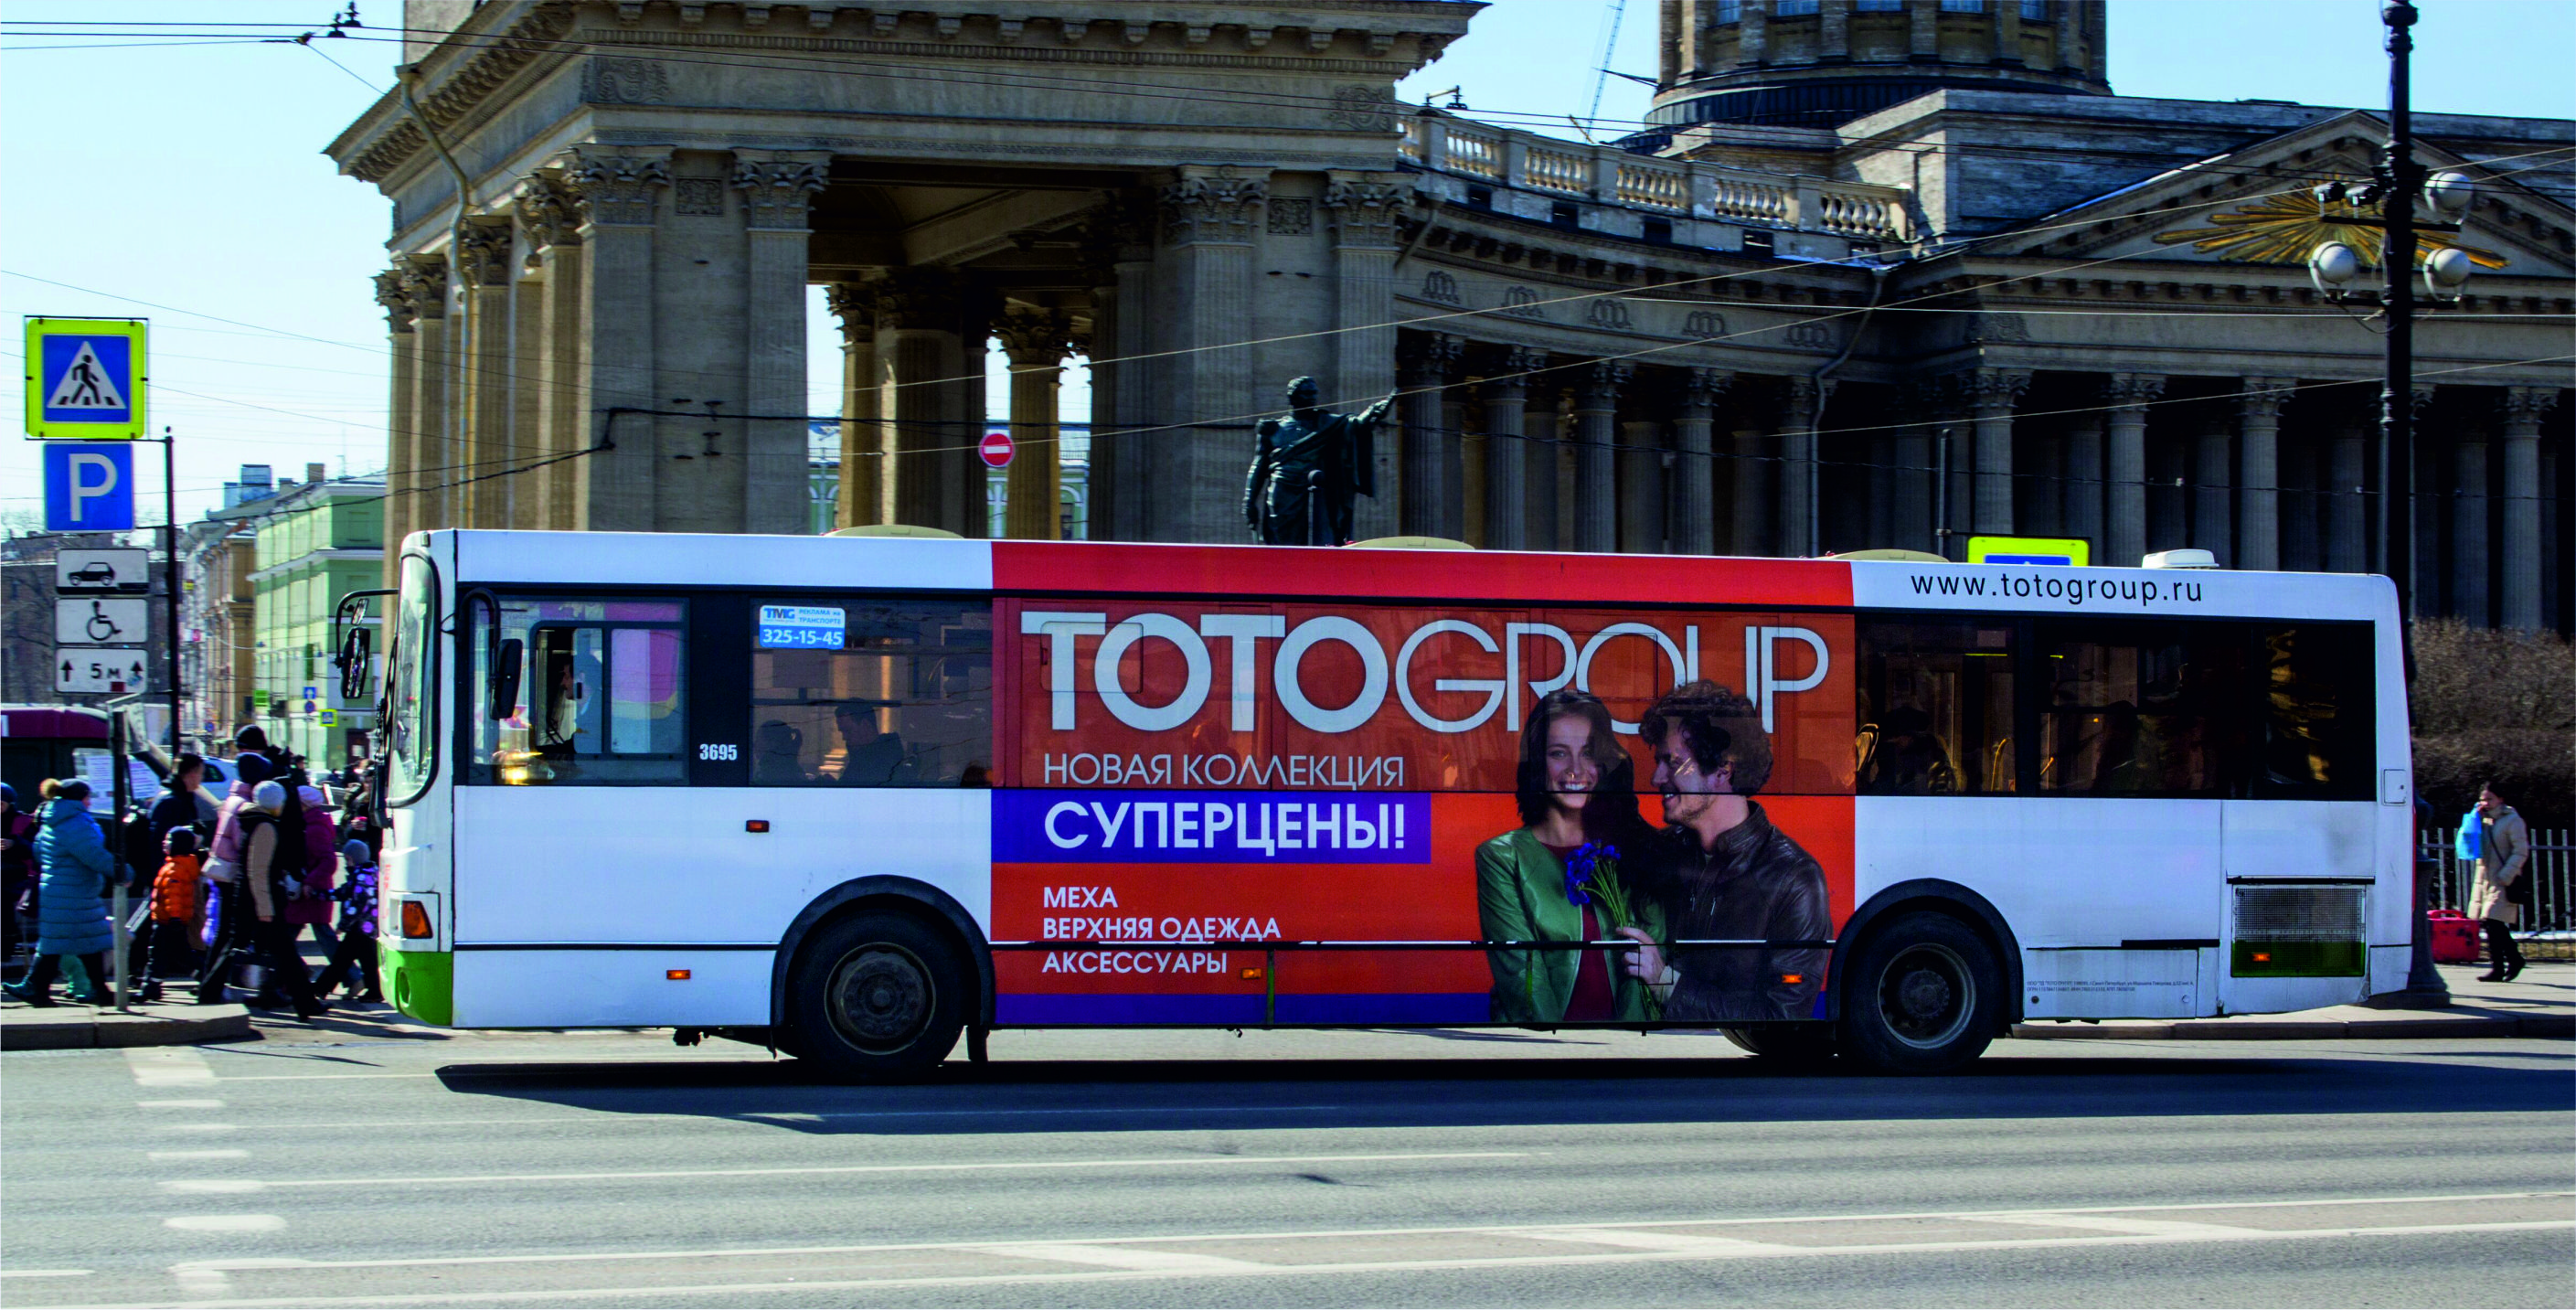 Яркий постер на левом борту автобуса